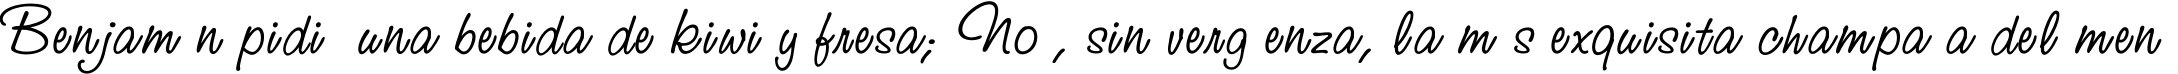 Пример написания шрифтом StudioScriptC текста на испанском